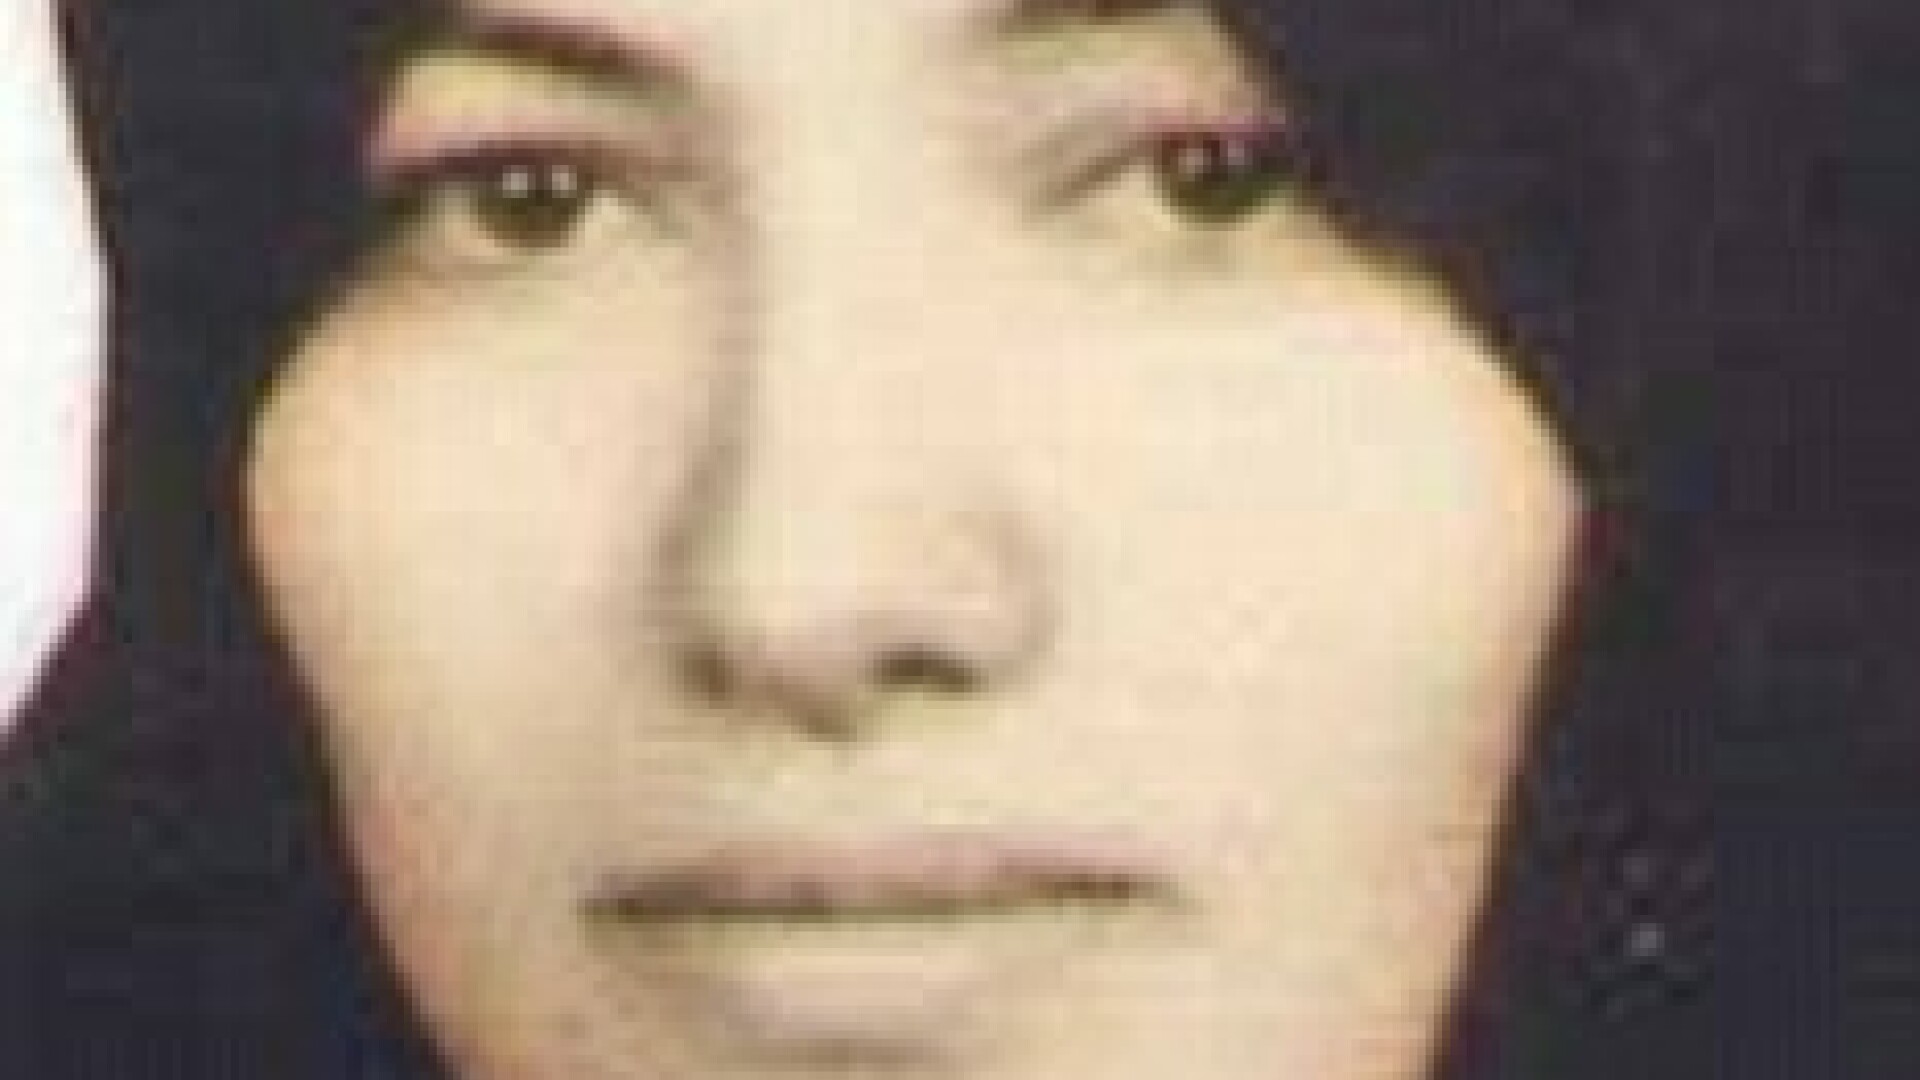 Sakineh Mohammadi-Ashtiani